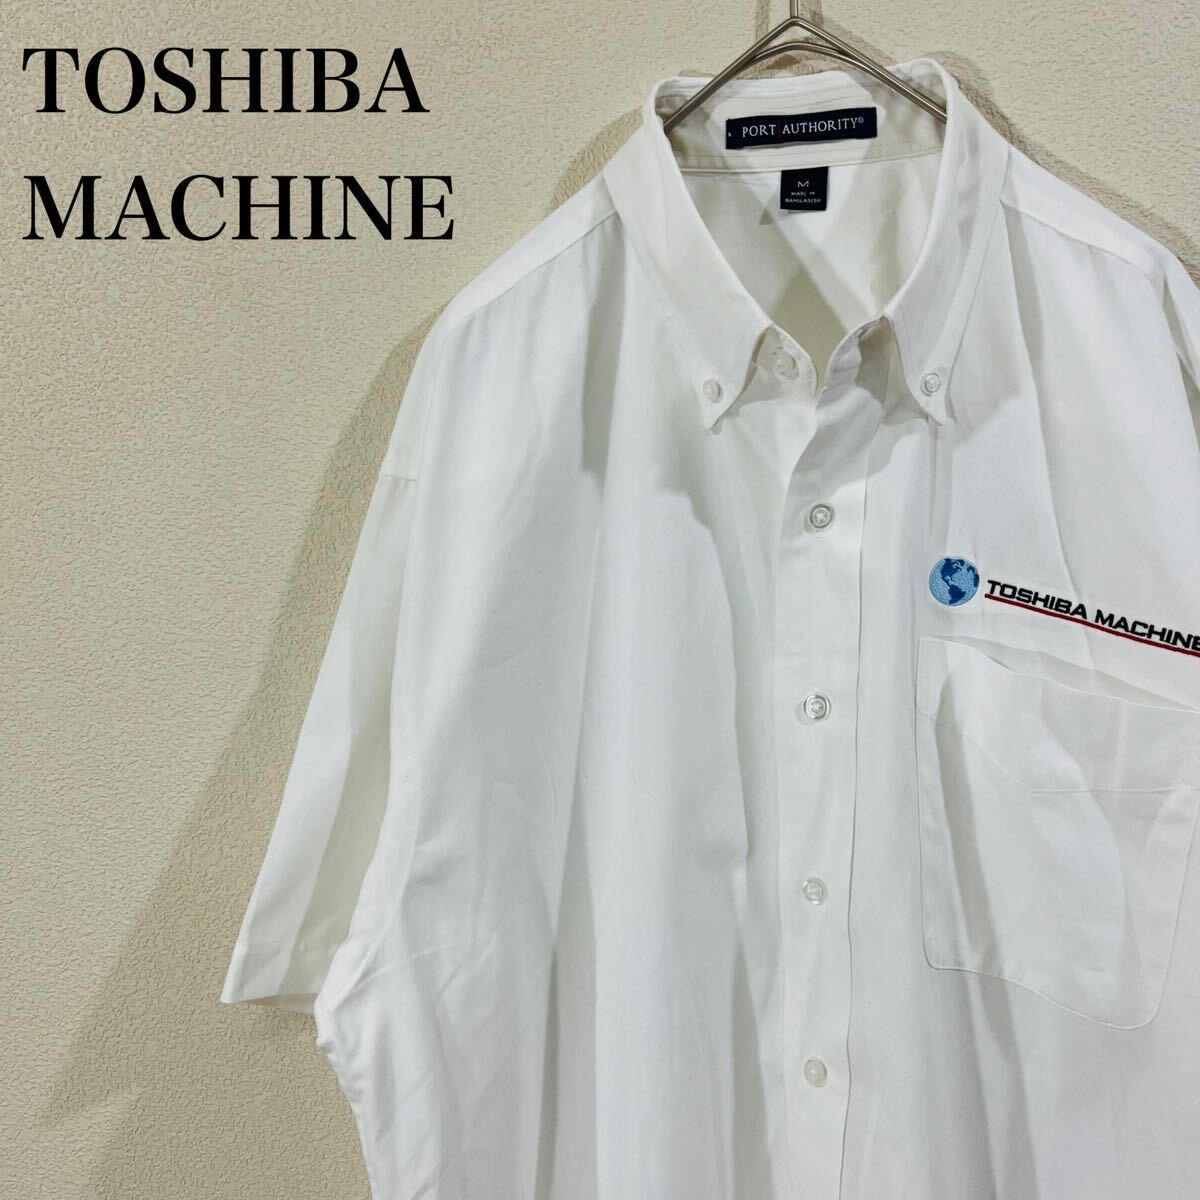 IK295 TOSHIBA MACHINE 東芝機械 企業制服 半袖シャツ ボタンダウン ホワイト ロゴ刺繍 コットン 送料無料